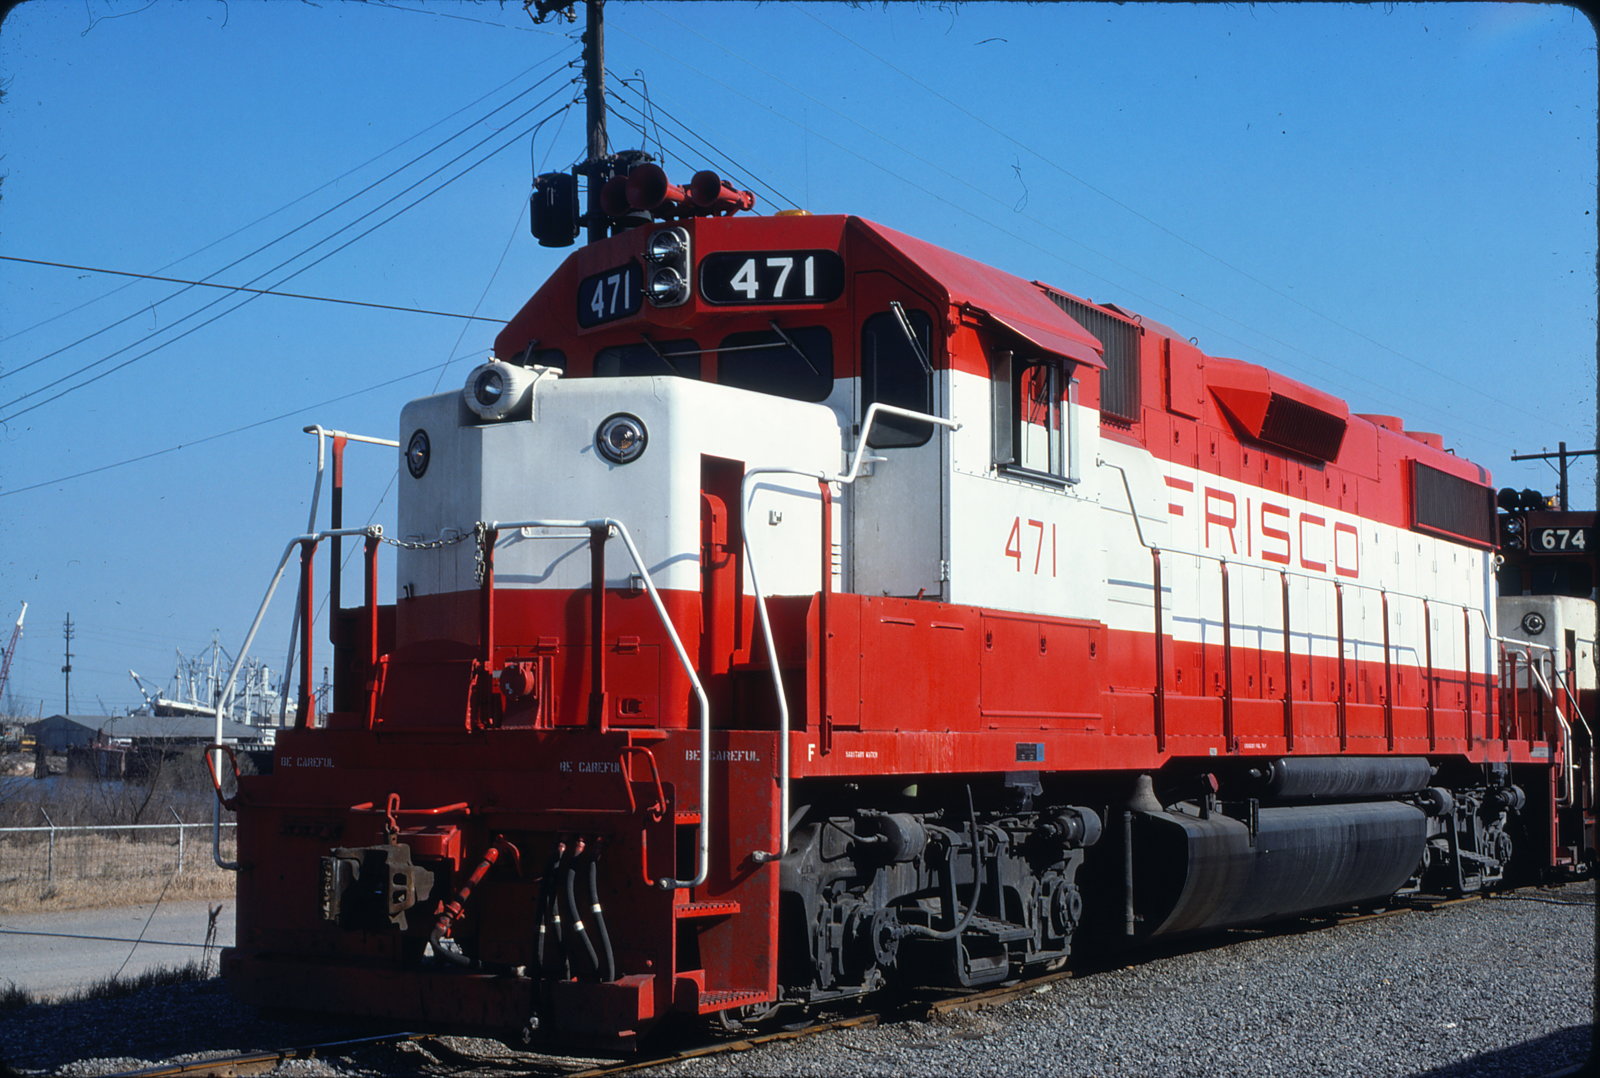 SLSF GP38-2-471-at-Mobile-Alabama-on-February-15-1977-G.E.-Lloyd.jpg